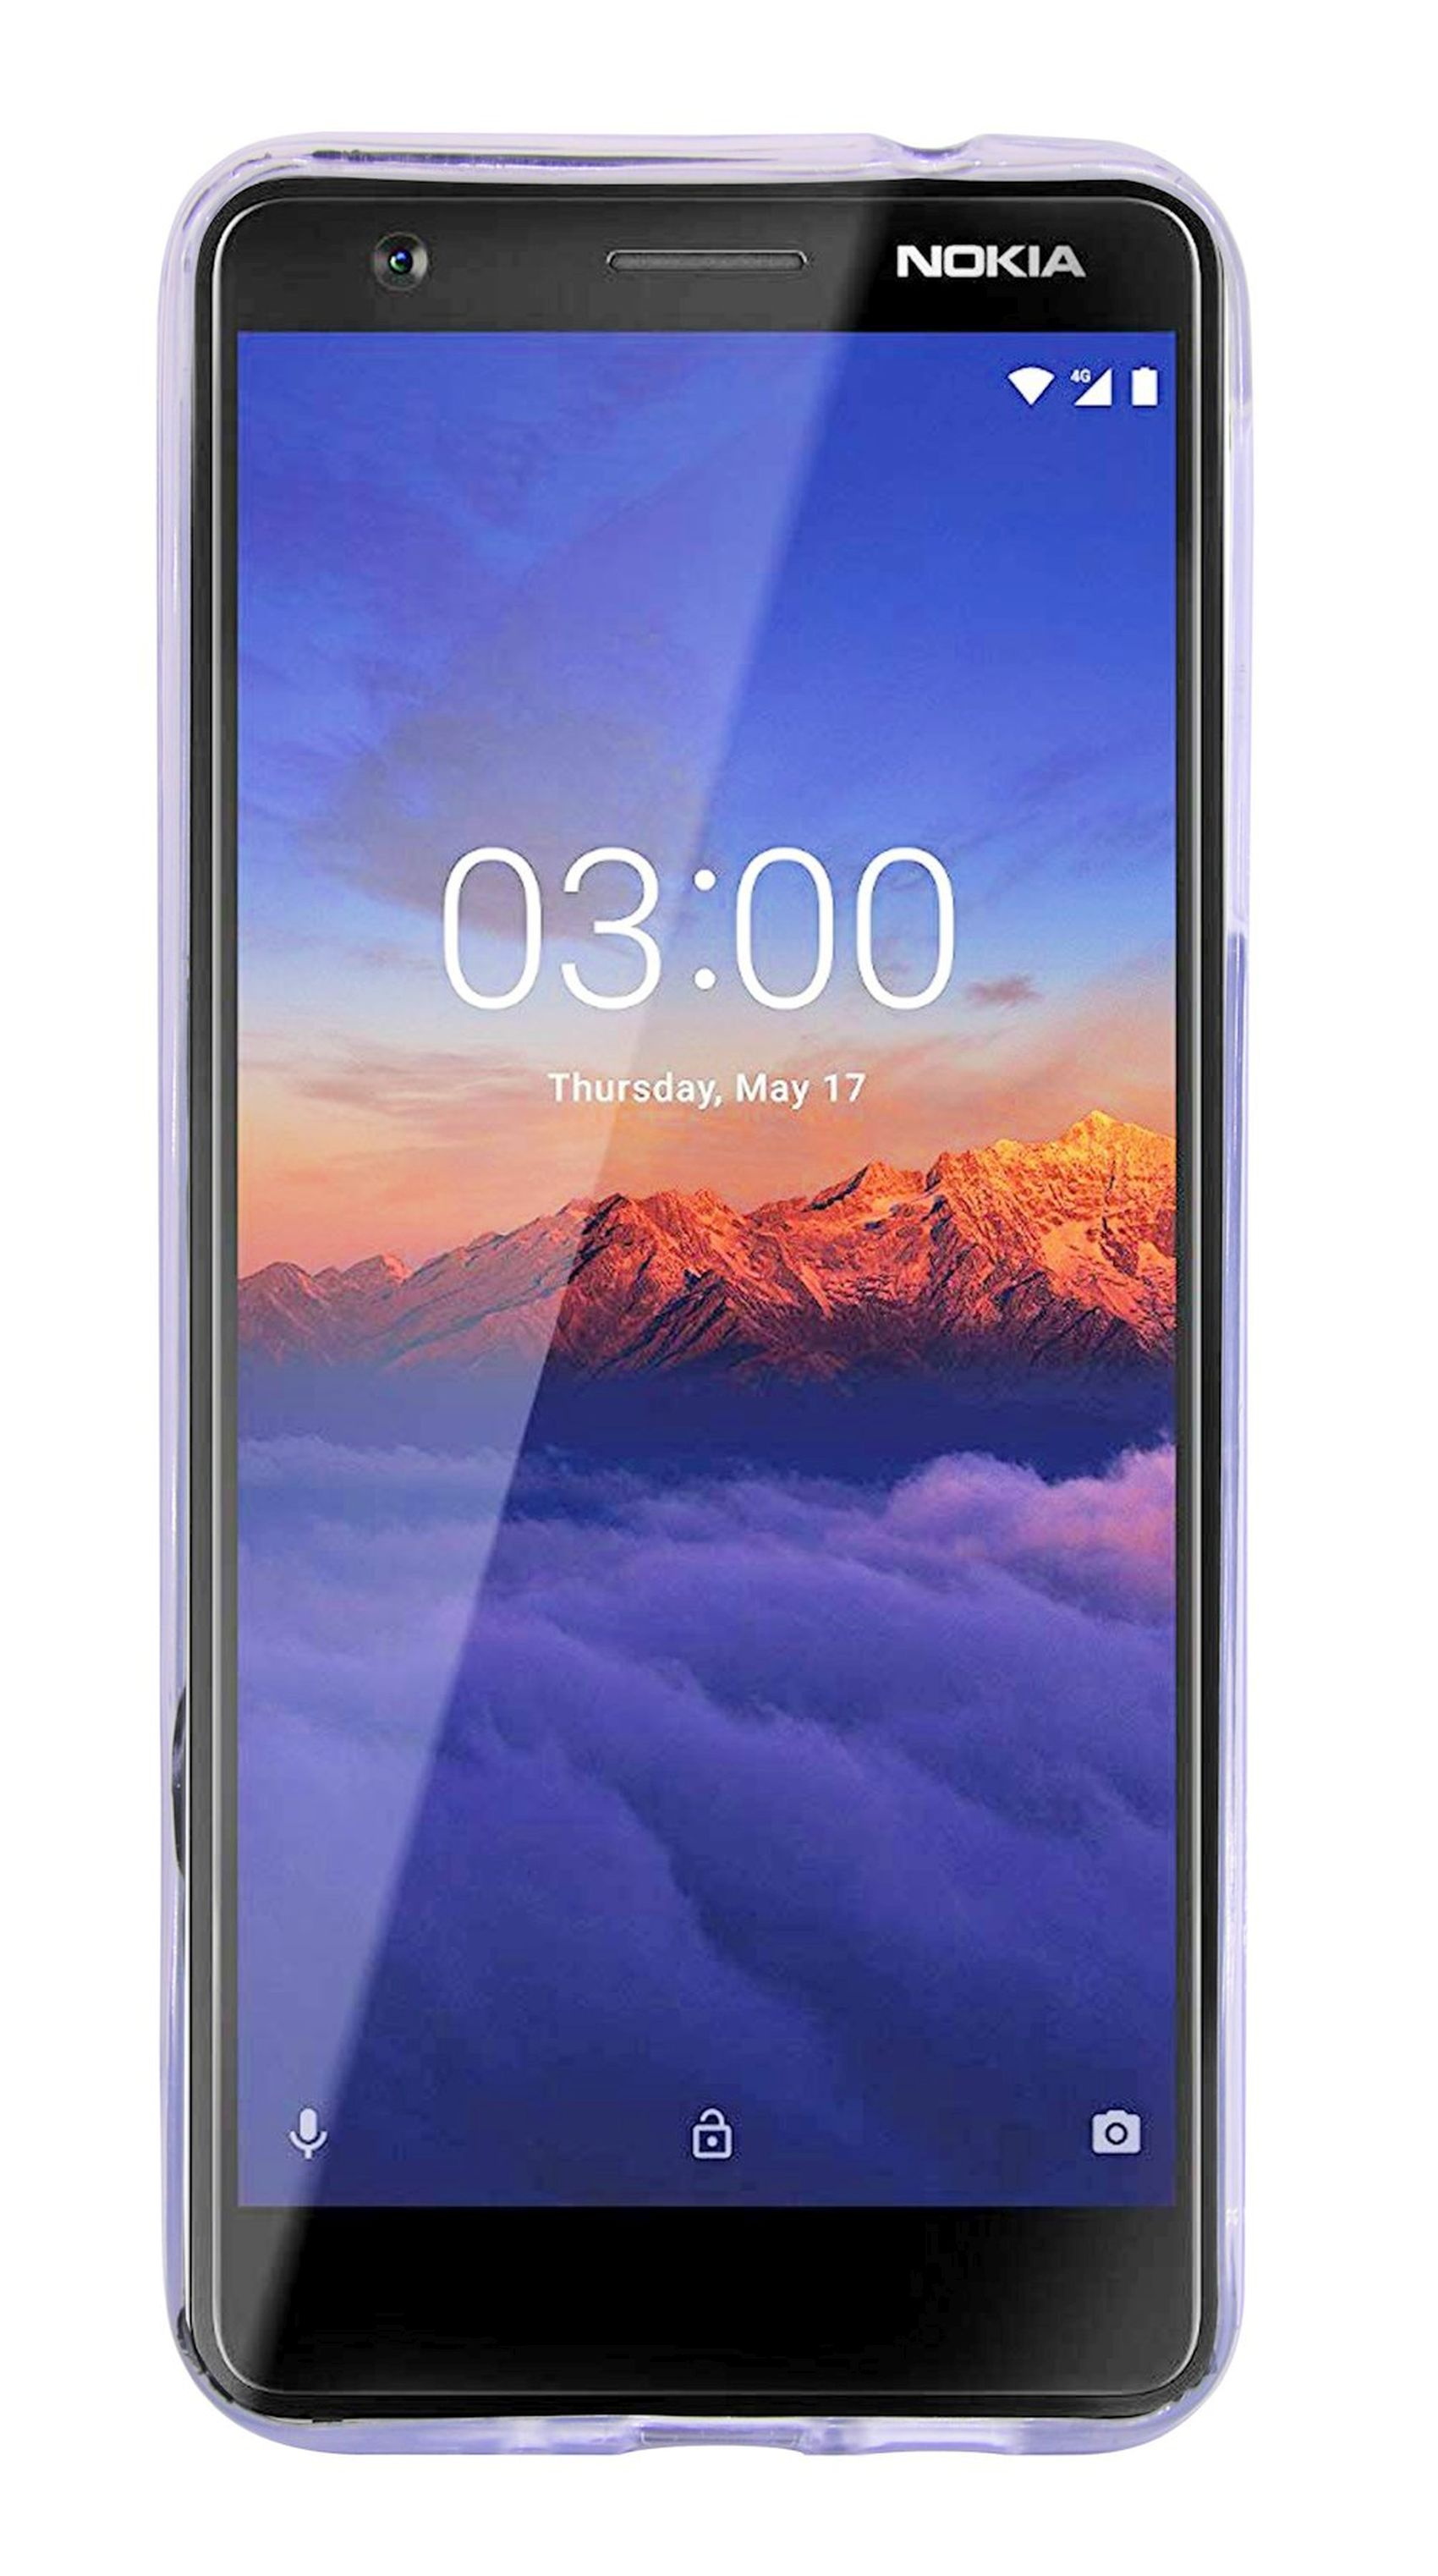 COFI Grau Bumper, 3.1 (2018), Basic Nokia, Cover,